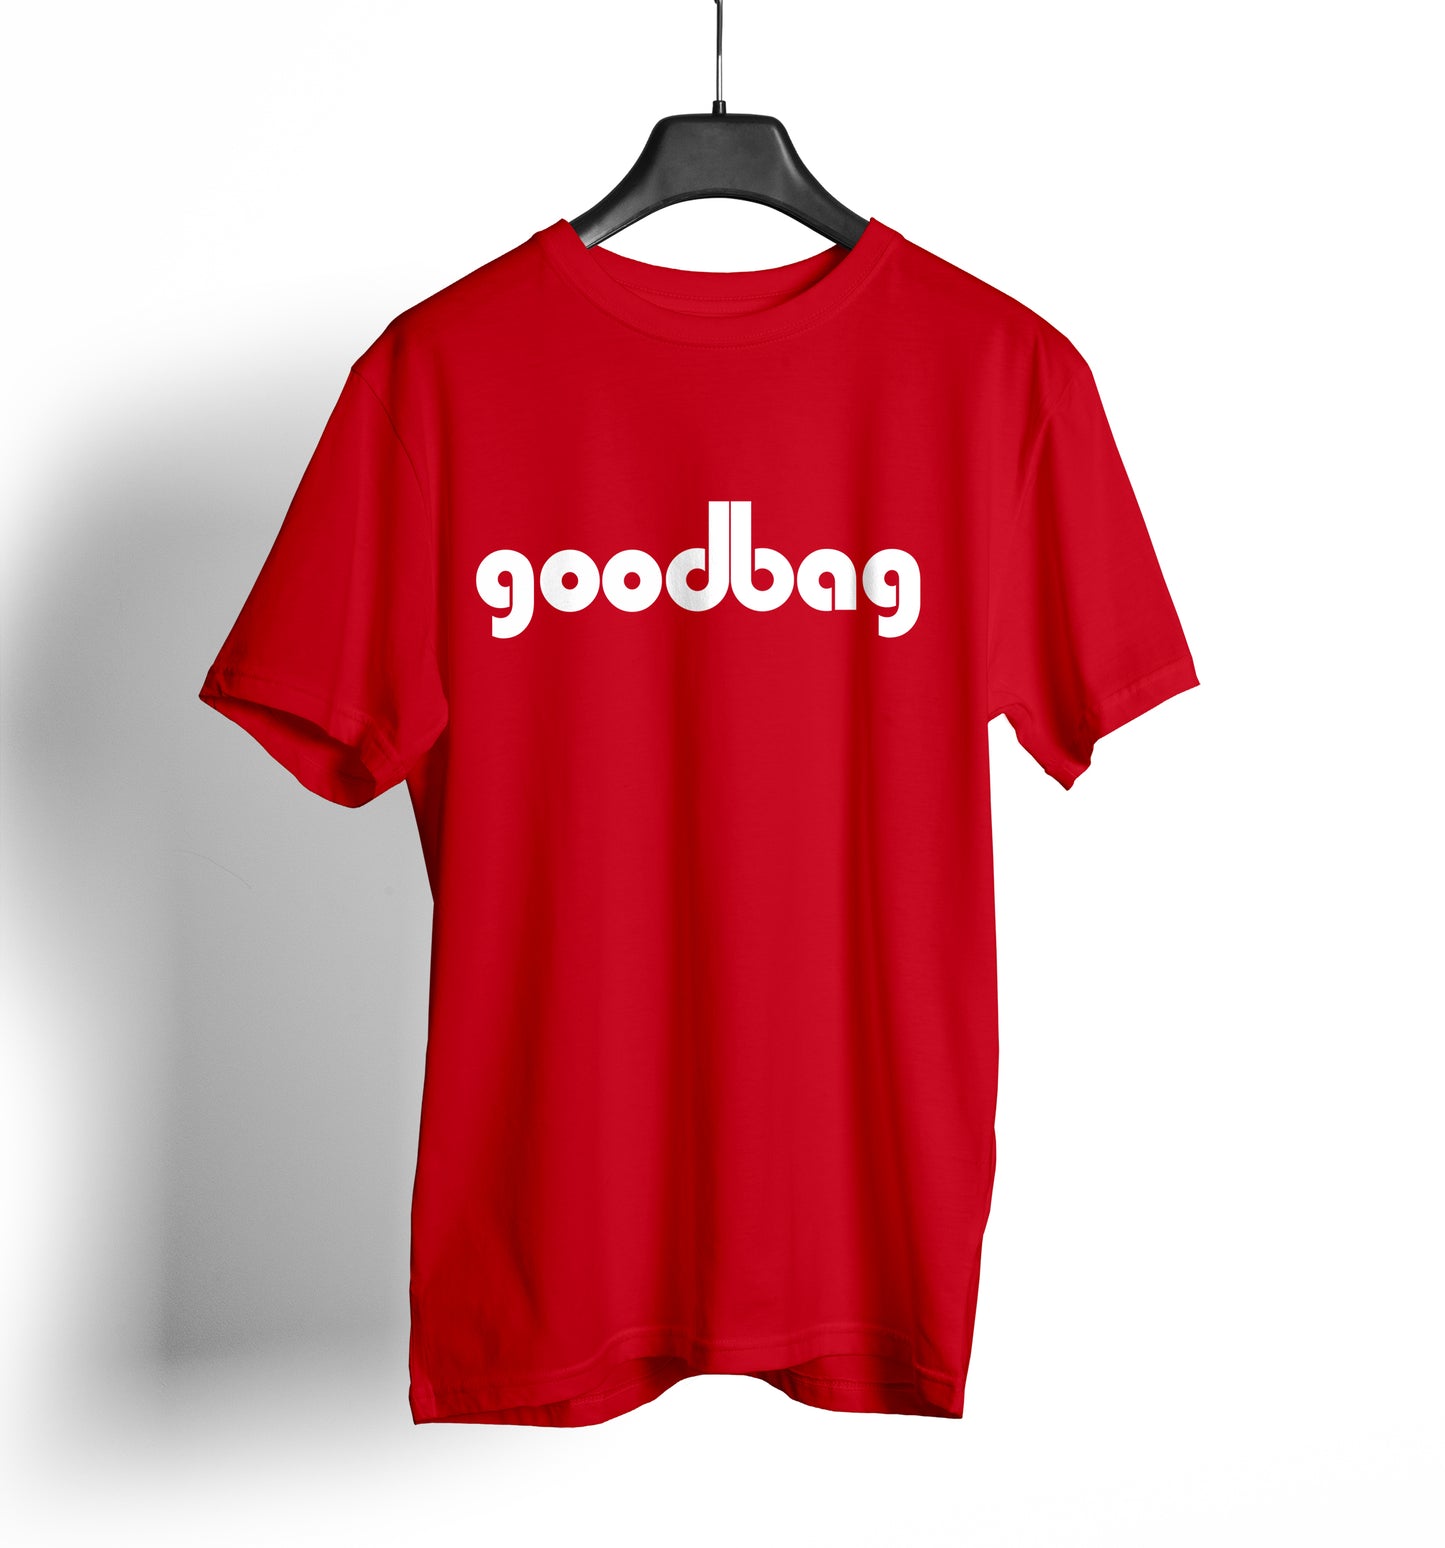 cornhole shirt goodbag red